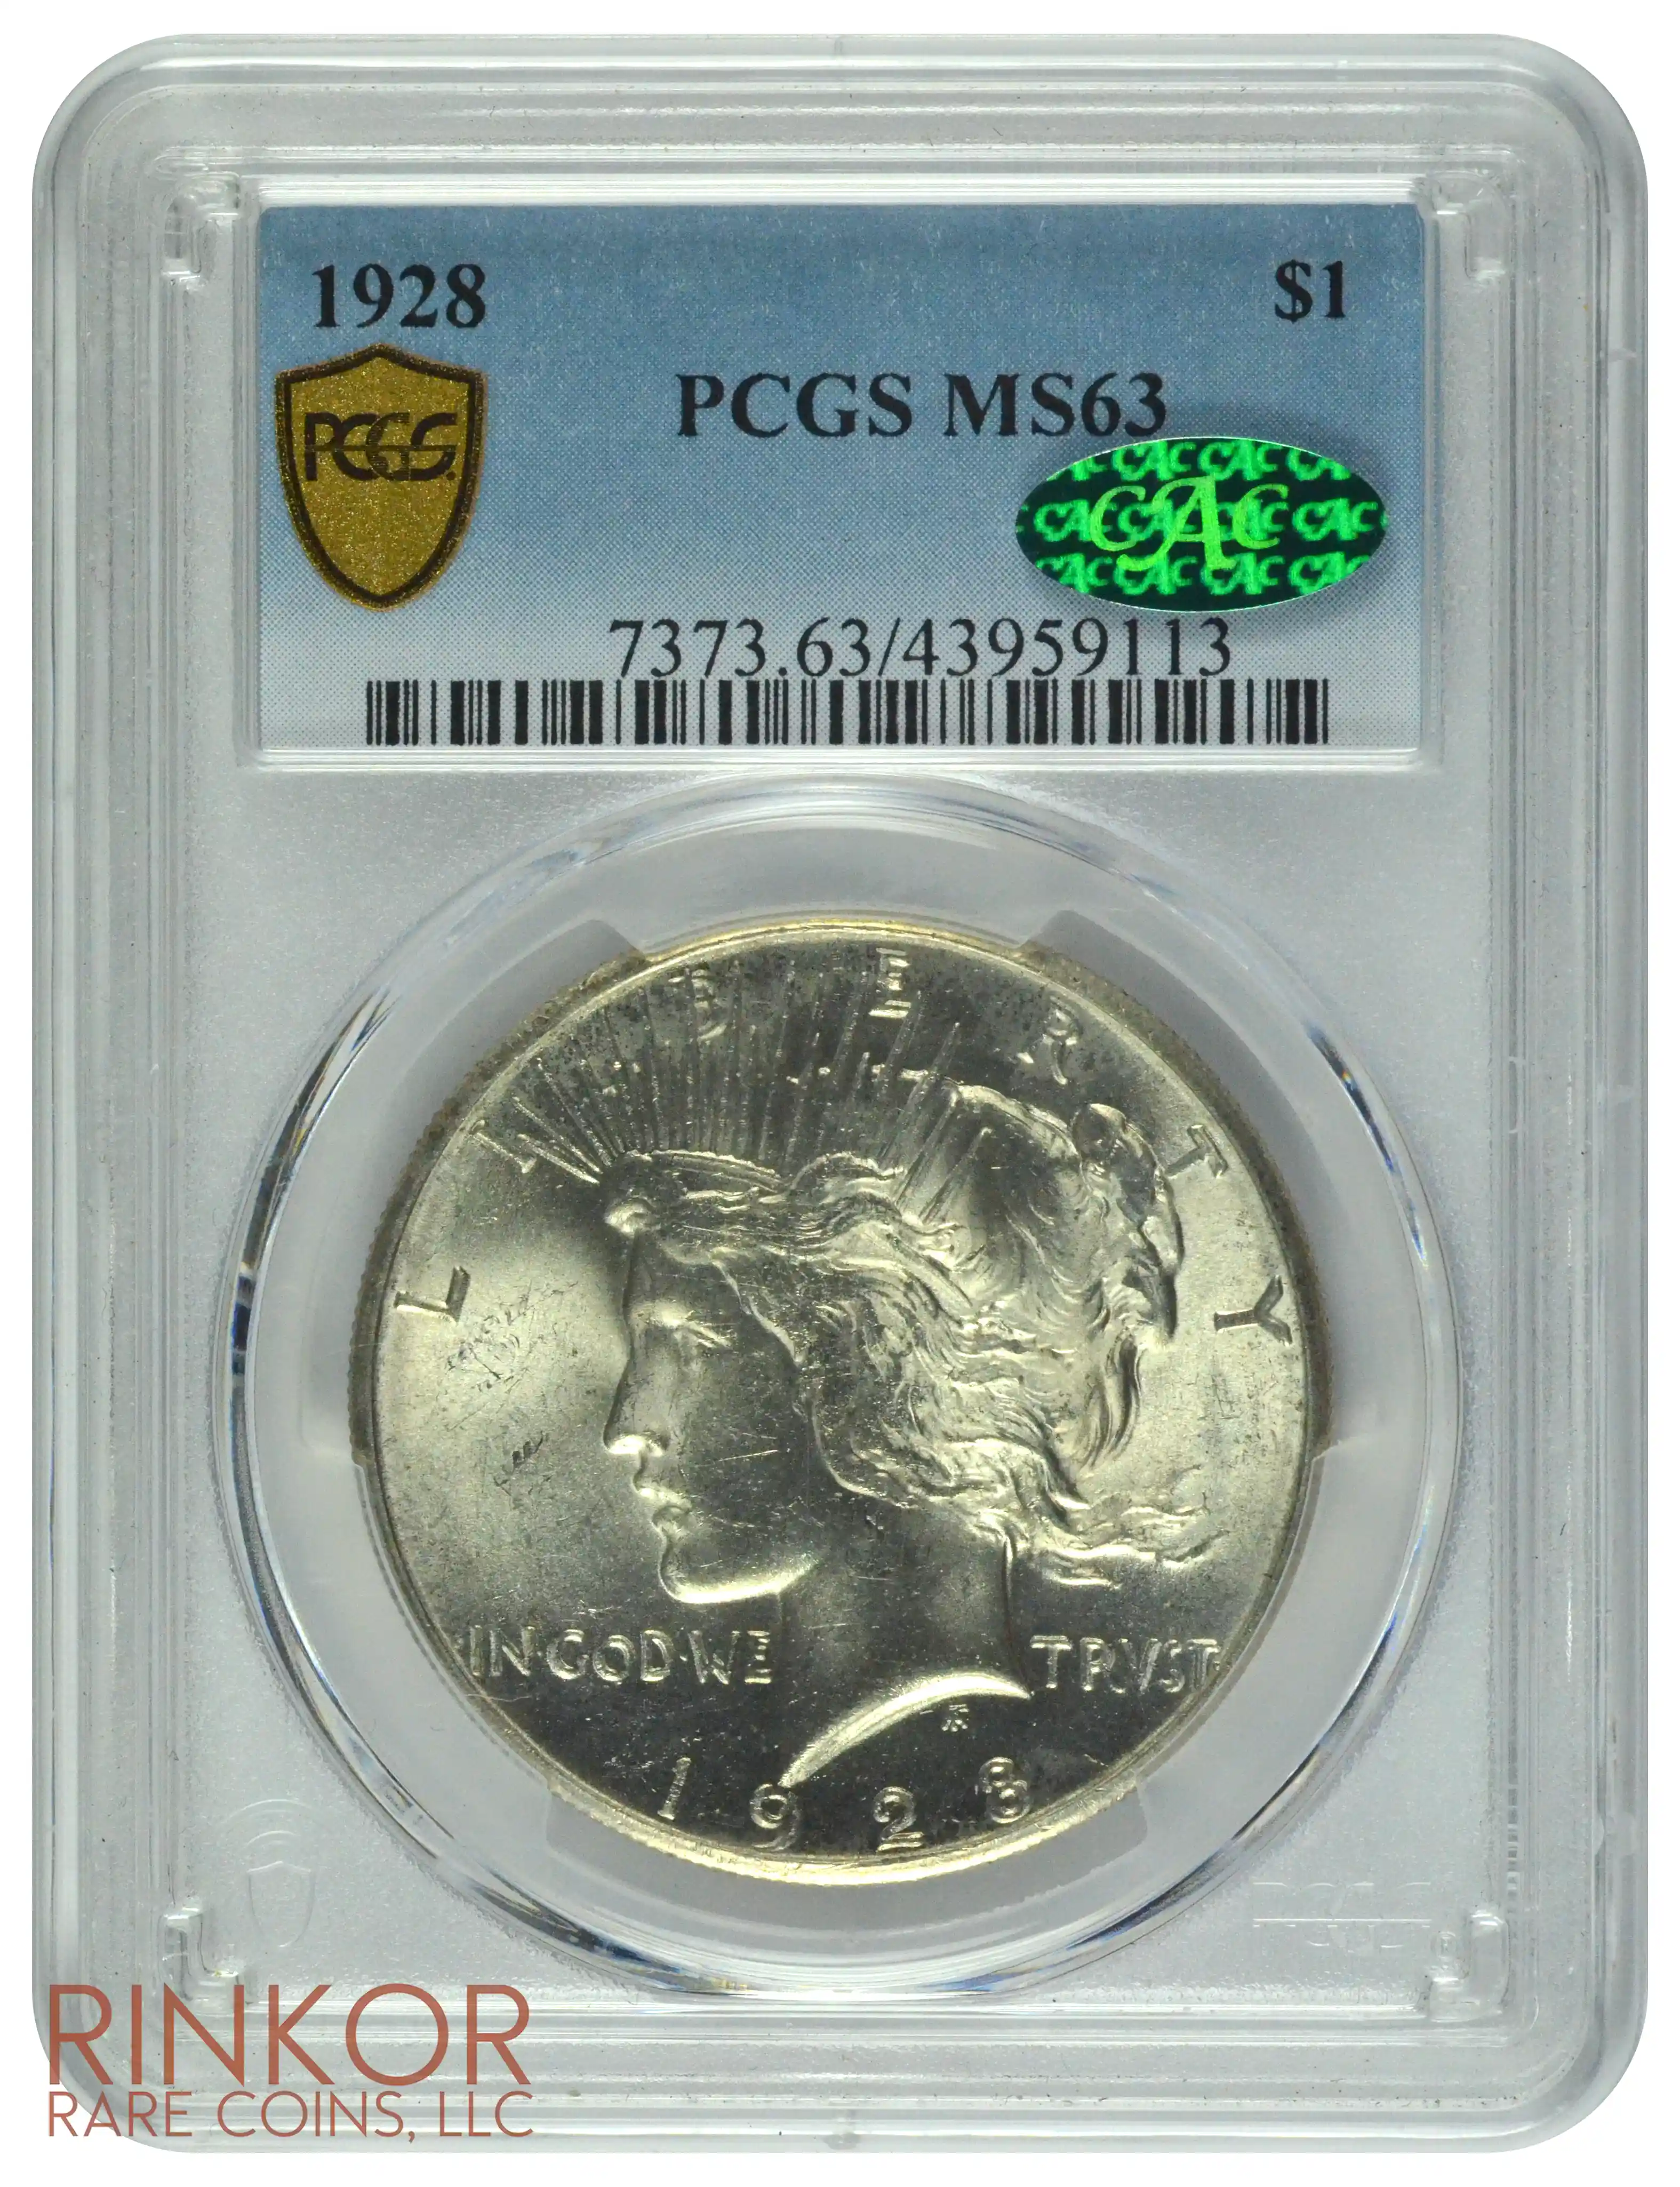 1928 $1 PCGS MS 63 CAC